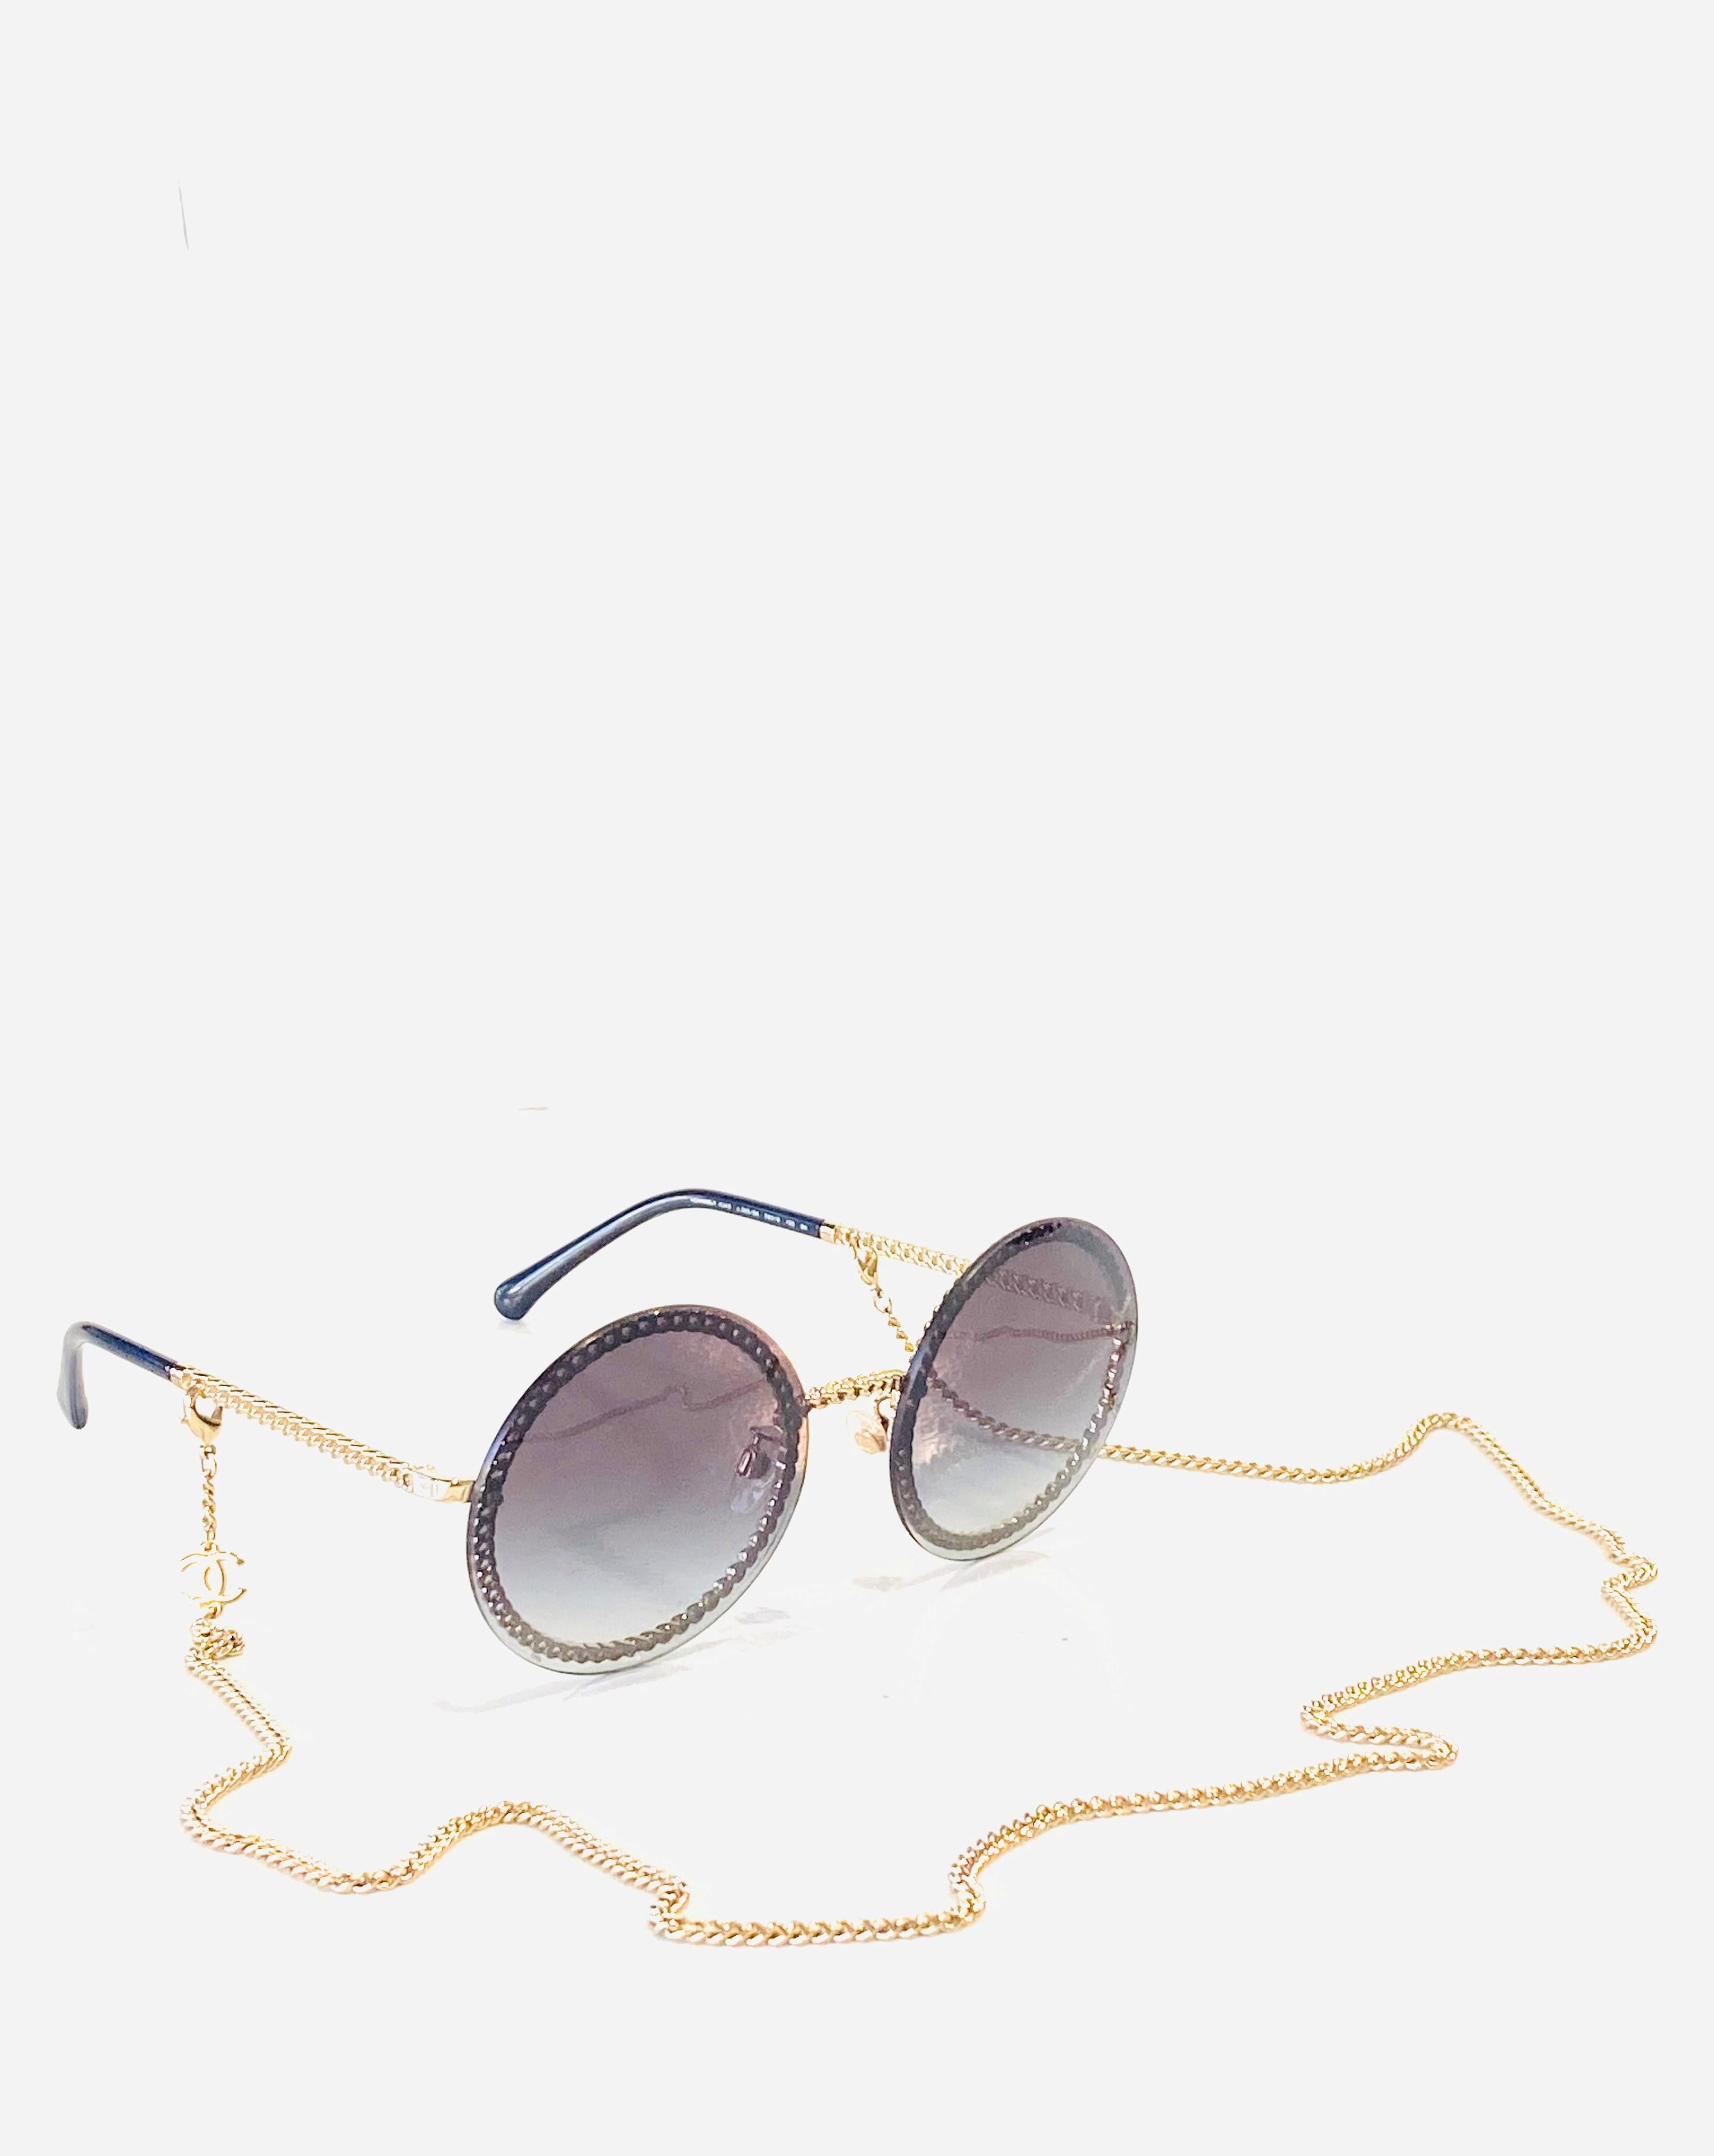 CHANEL Navy Round Sunglasses w/ Gold Chain  4